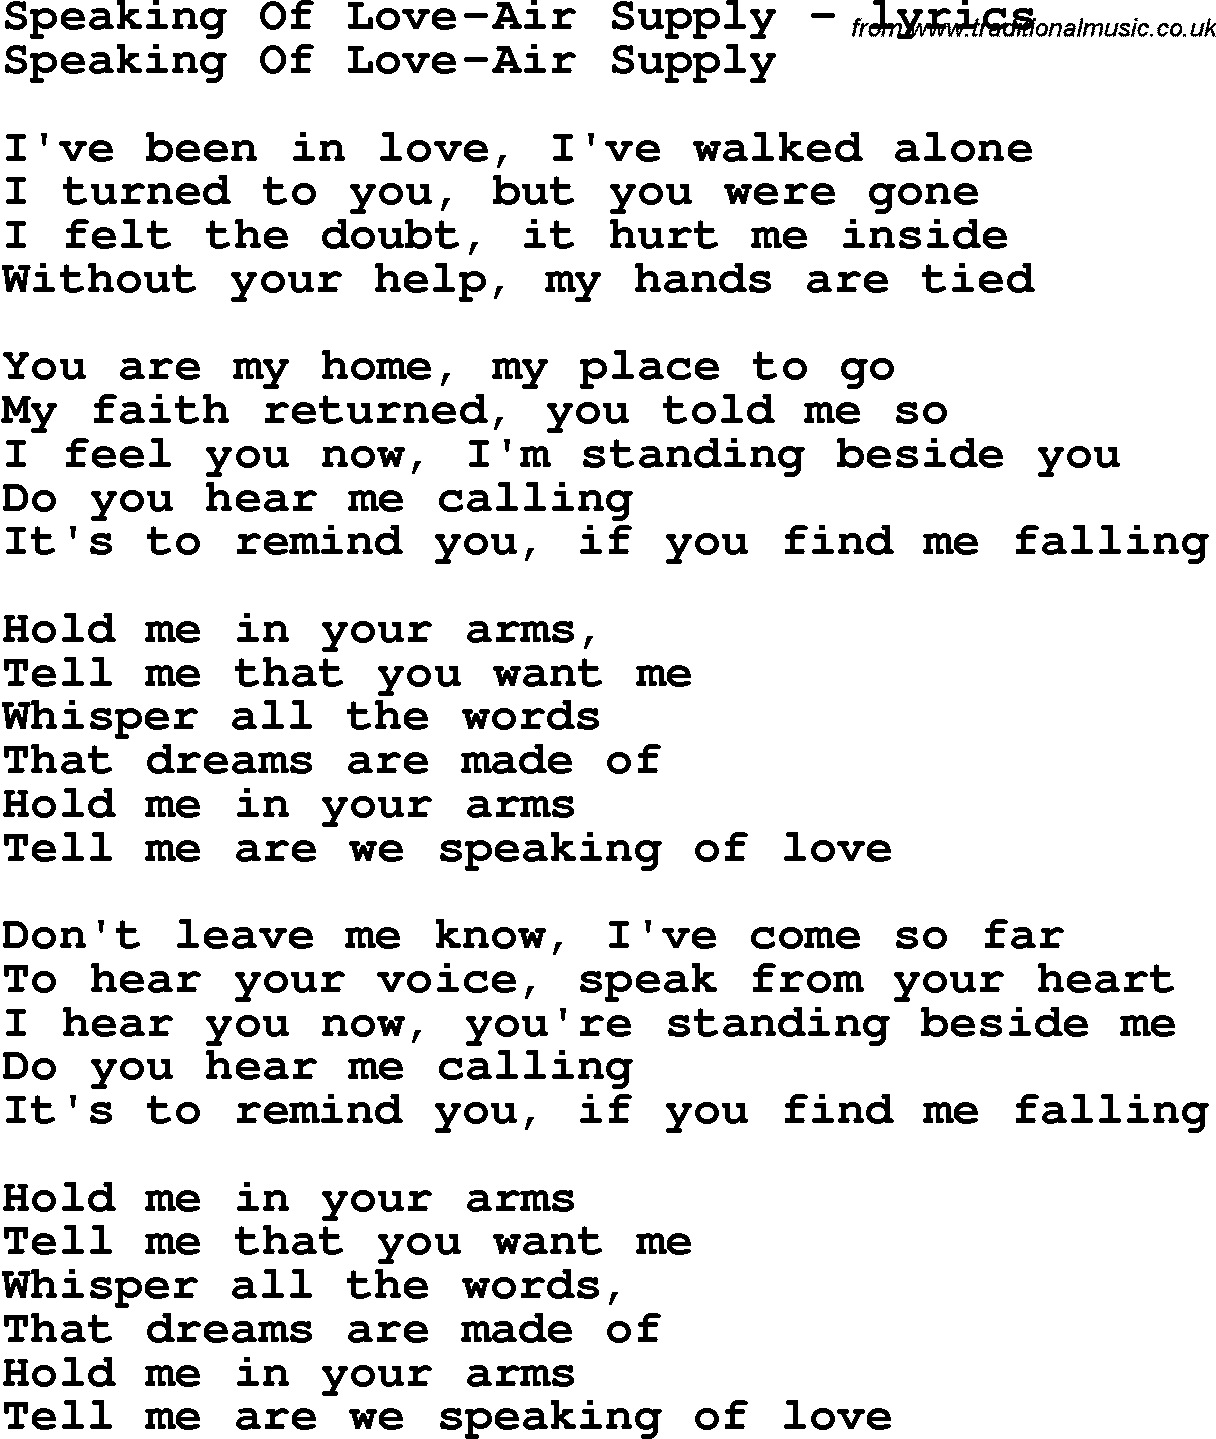 Love Song Lyrics for: Speaking Of Love-Air Supply